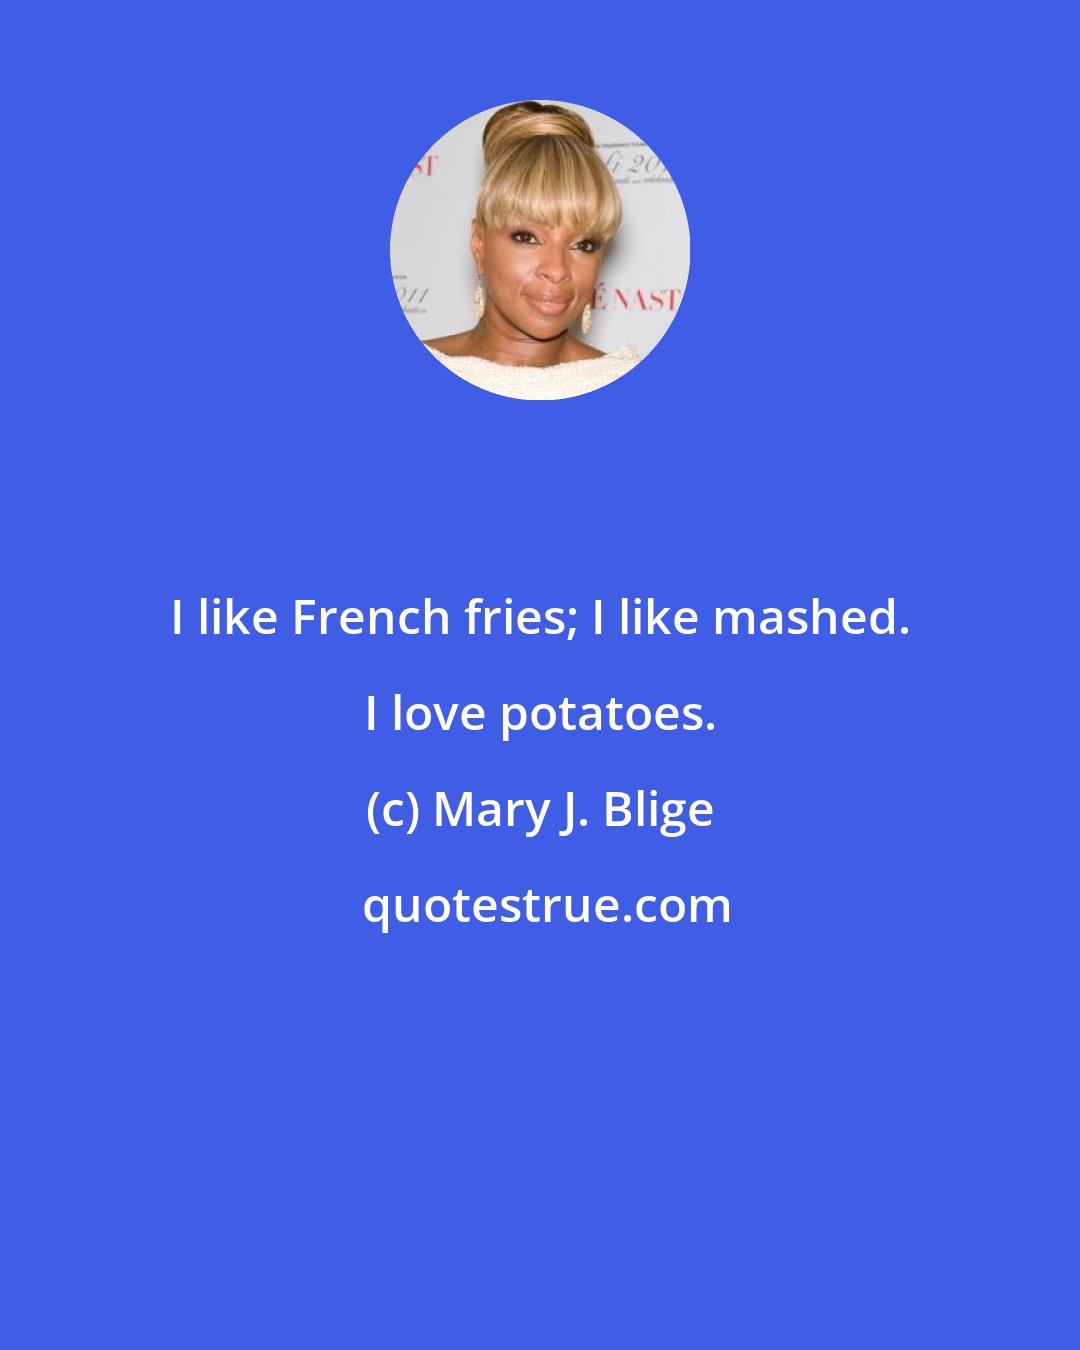 Mary J. Blige: I like French fries; I like mashed. I love potatoes.